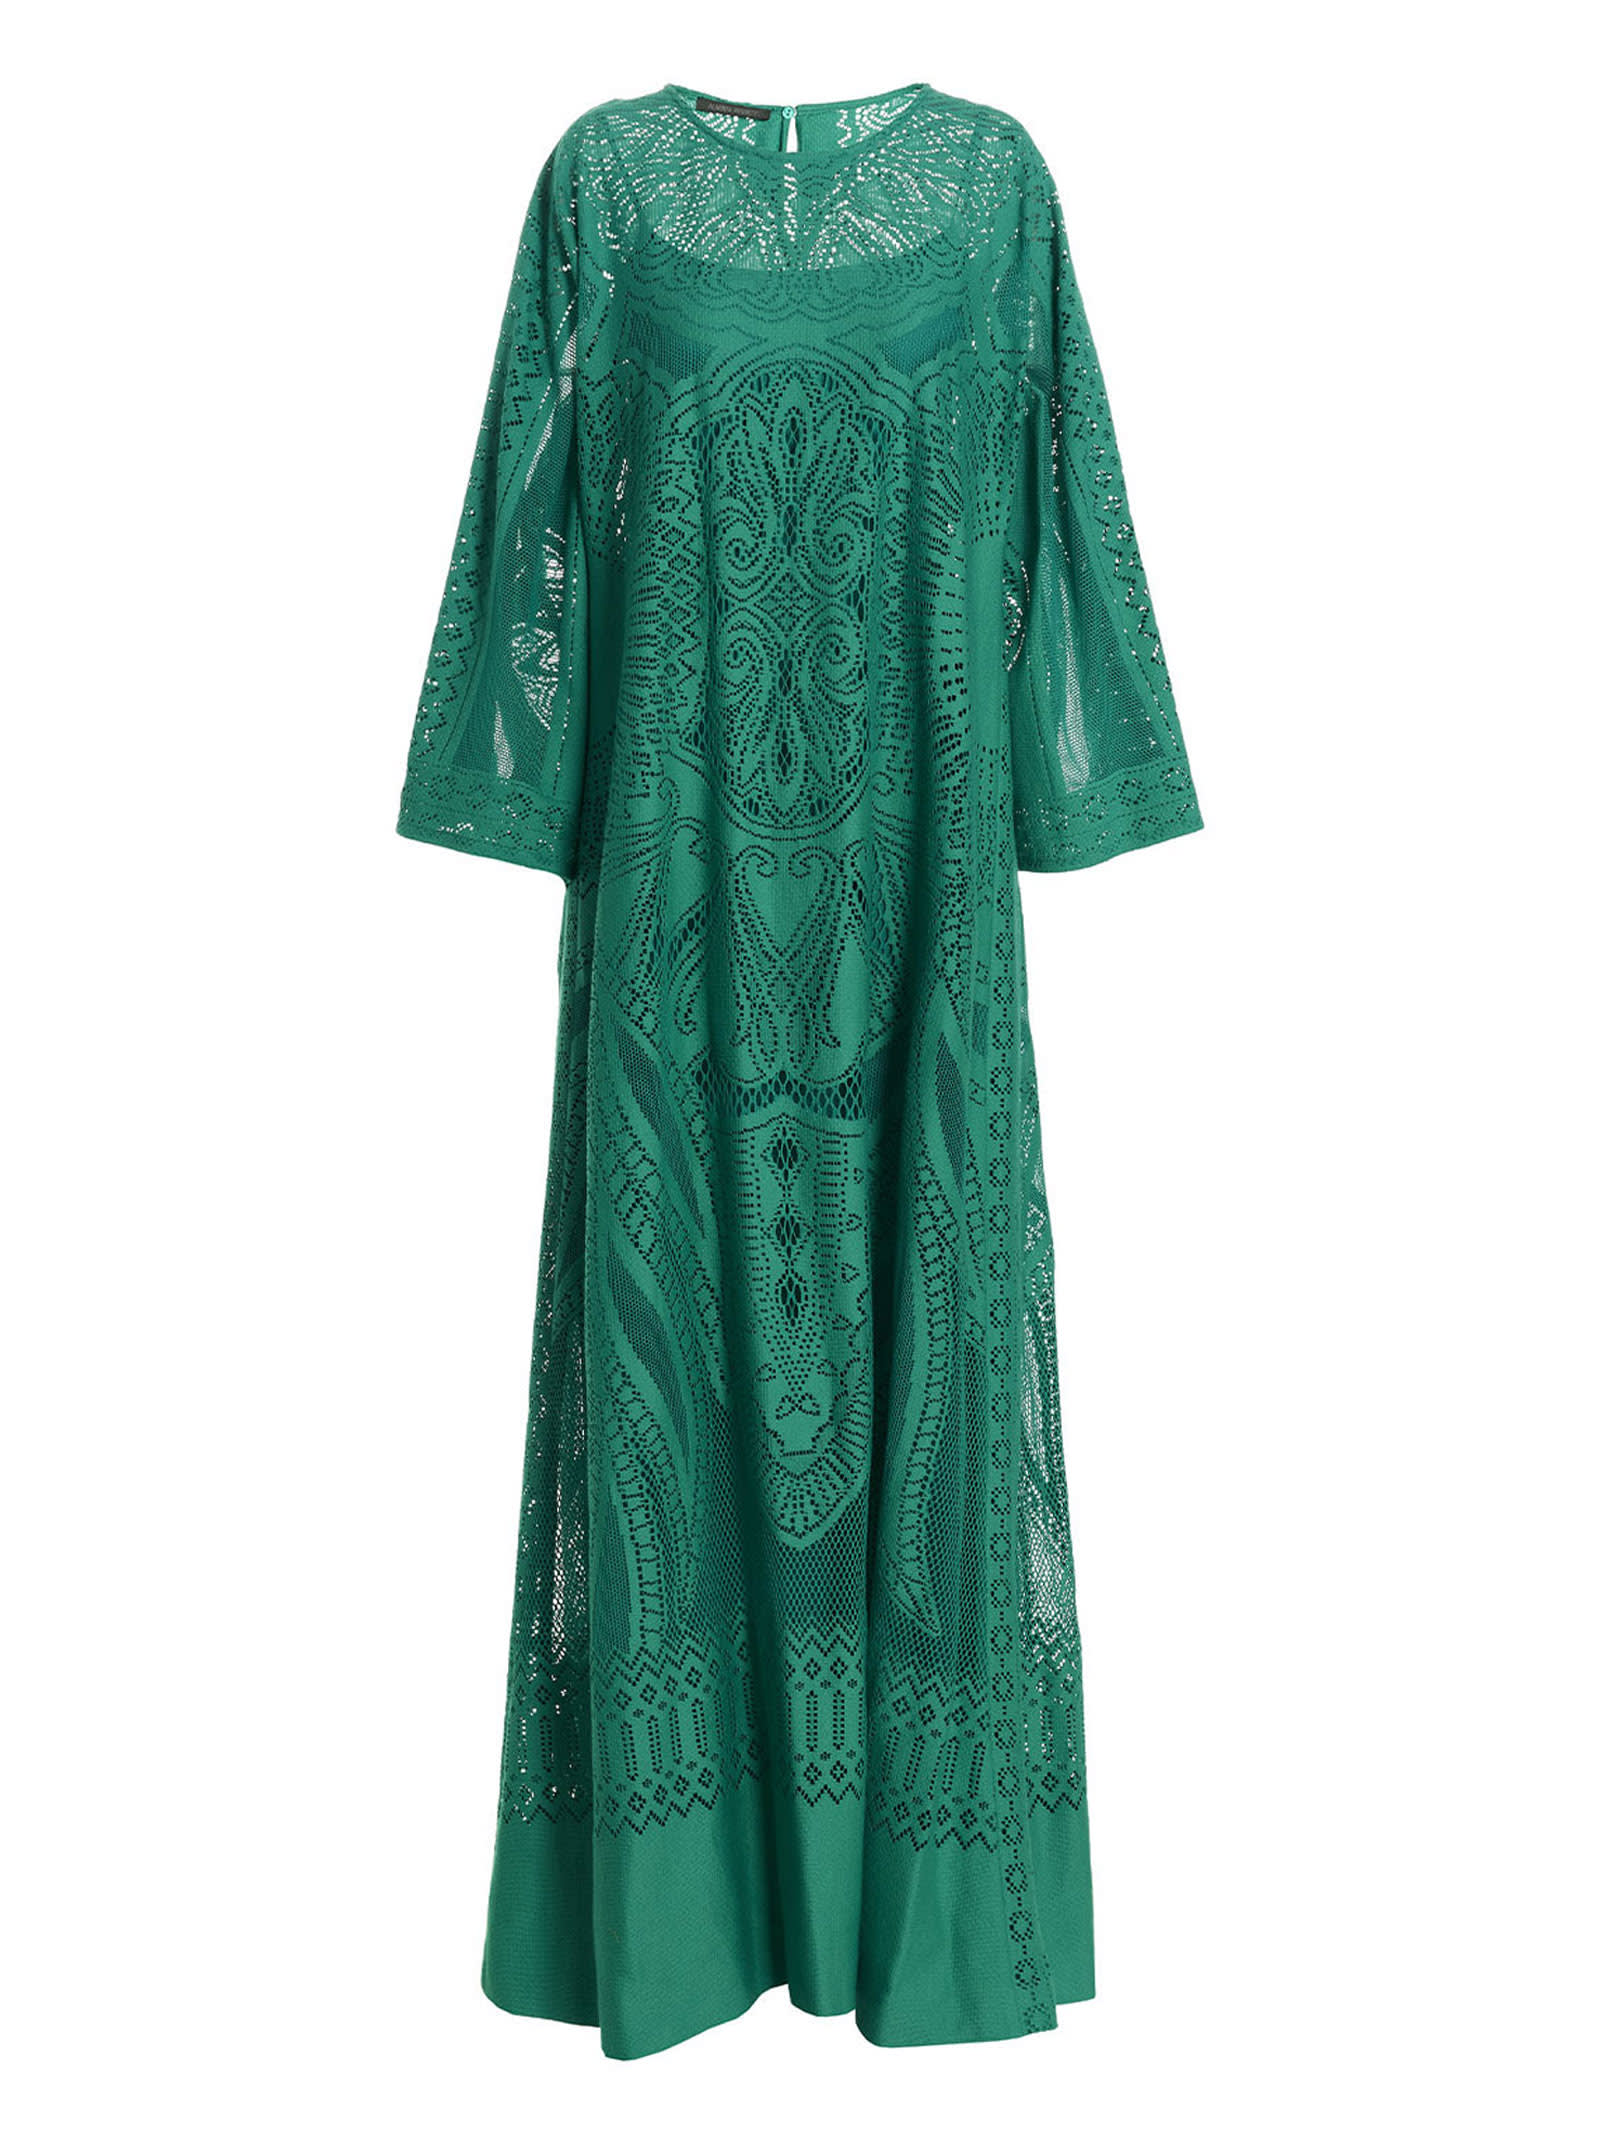 Alberta Ferretti Crochet Kaftano Dress In Green